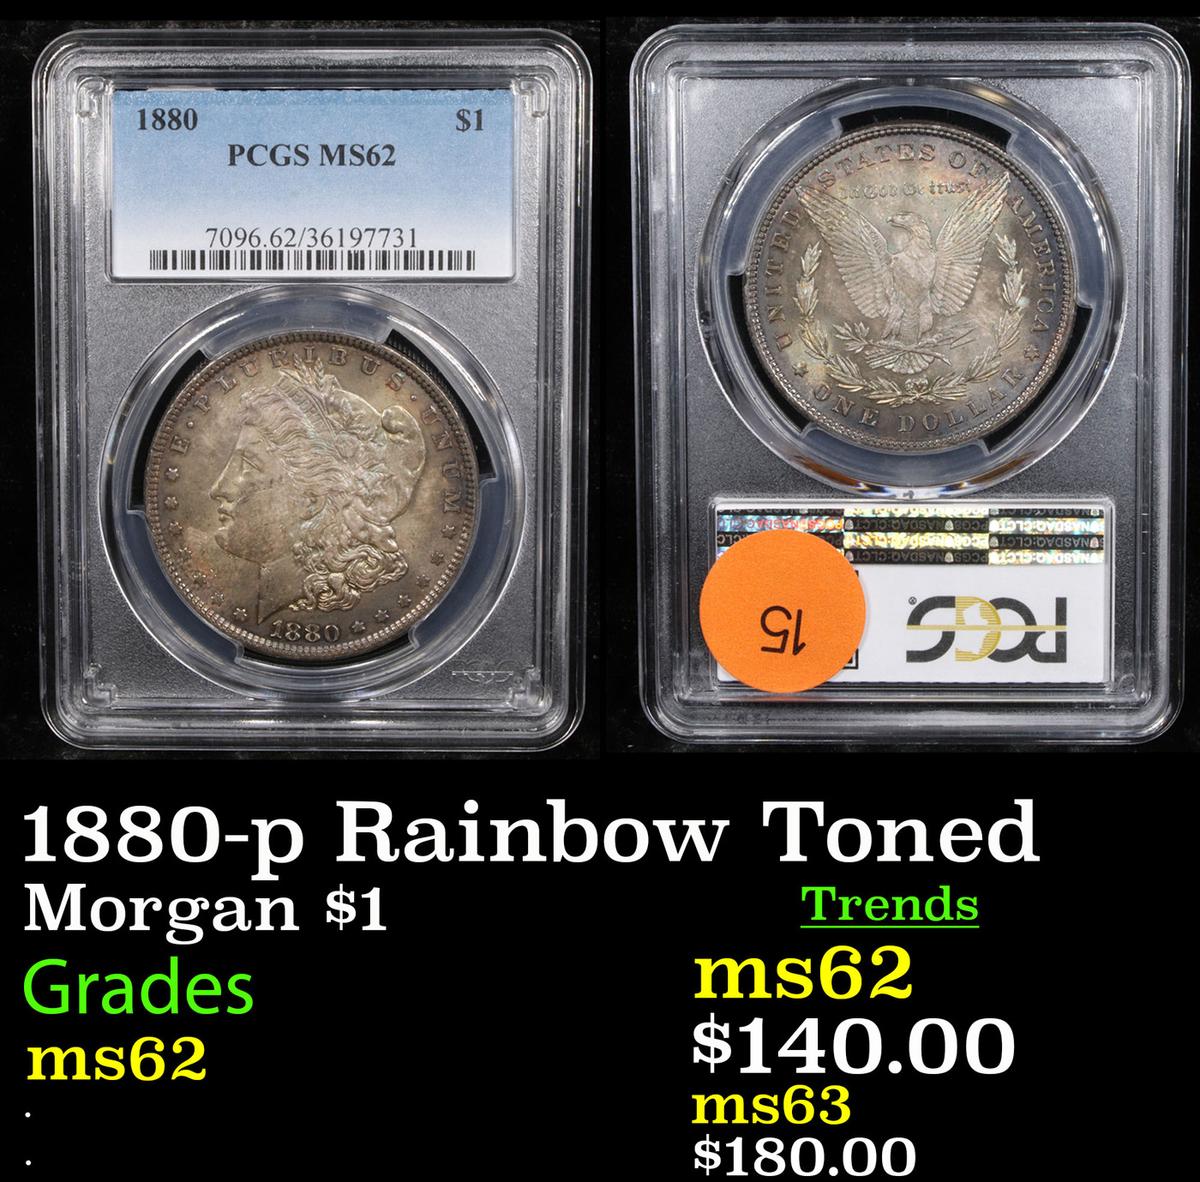 PCGS 1880-p Rainbow Toned Morgan Dollar $1 Graded ms62 By PCGS